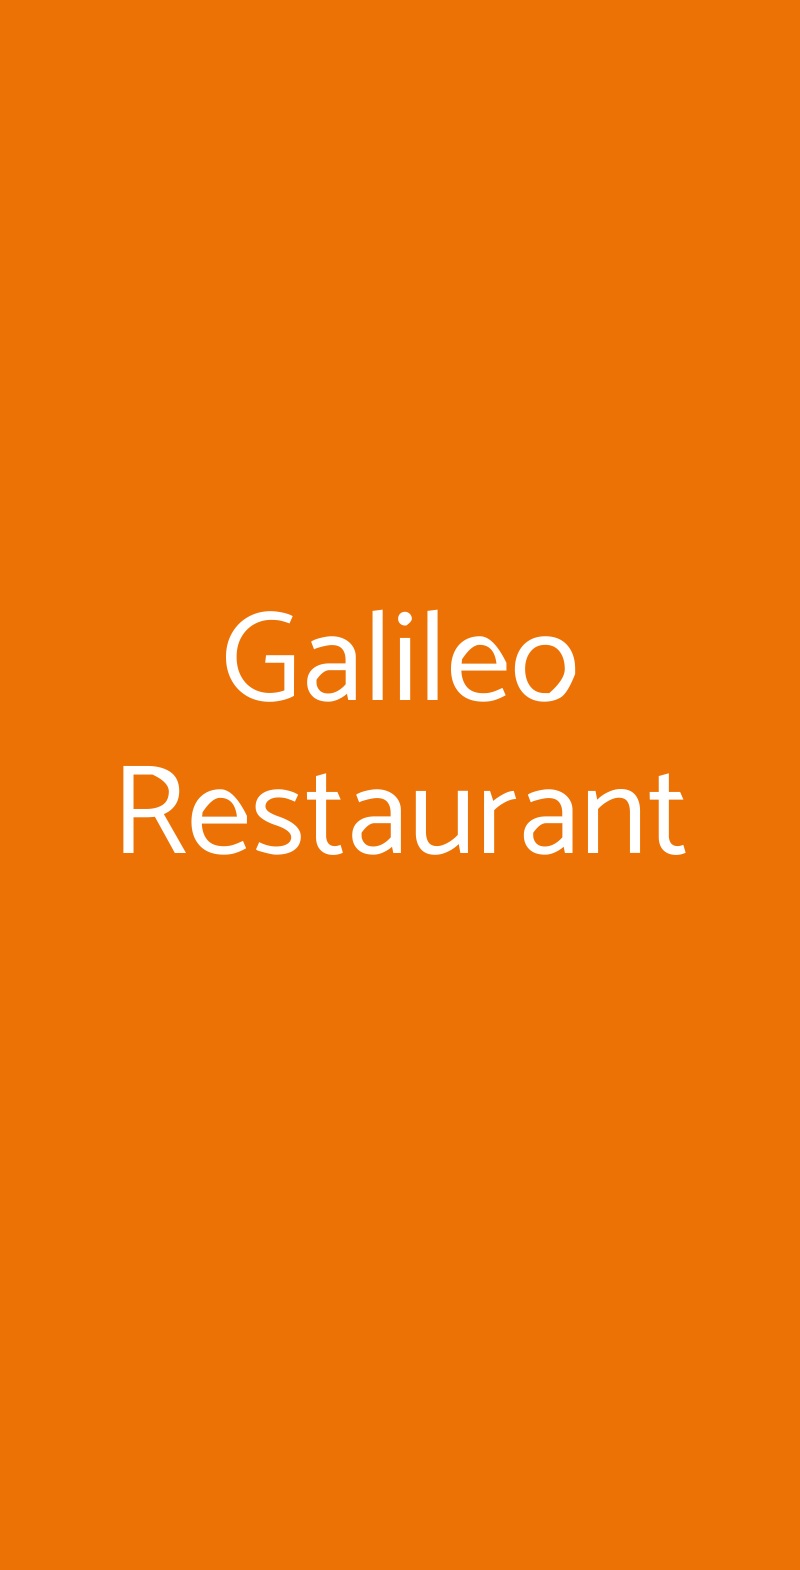 Galileo Restaurant Napoli menù 1 pagina